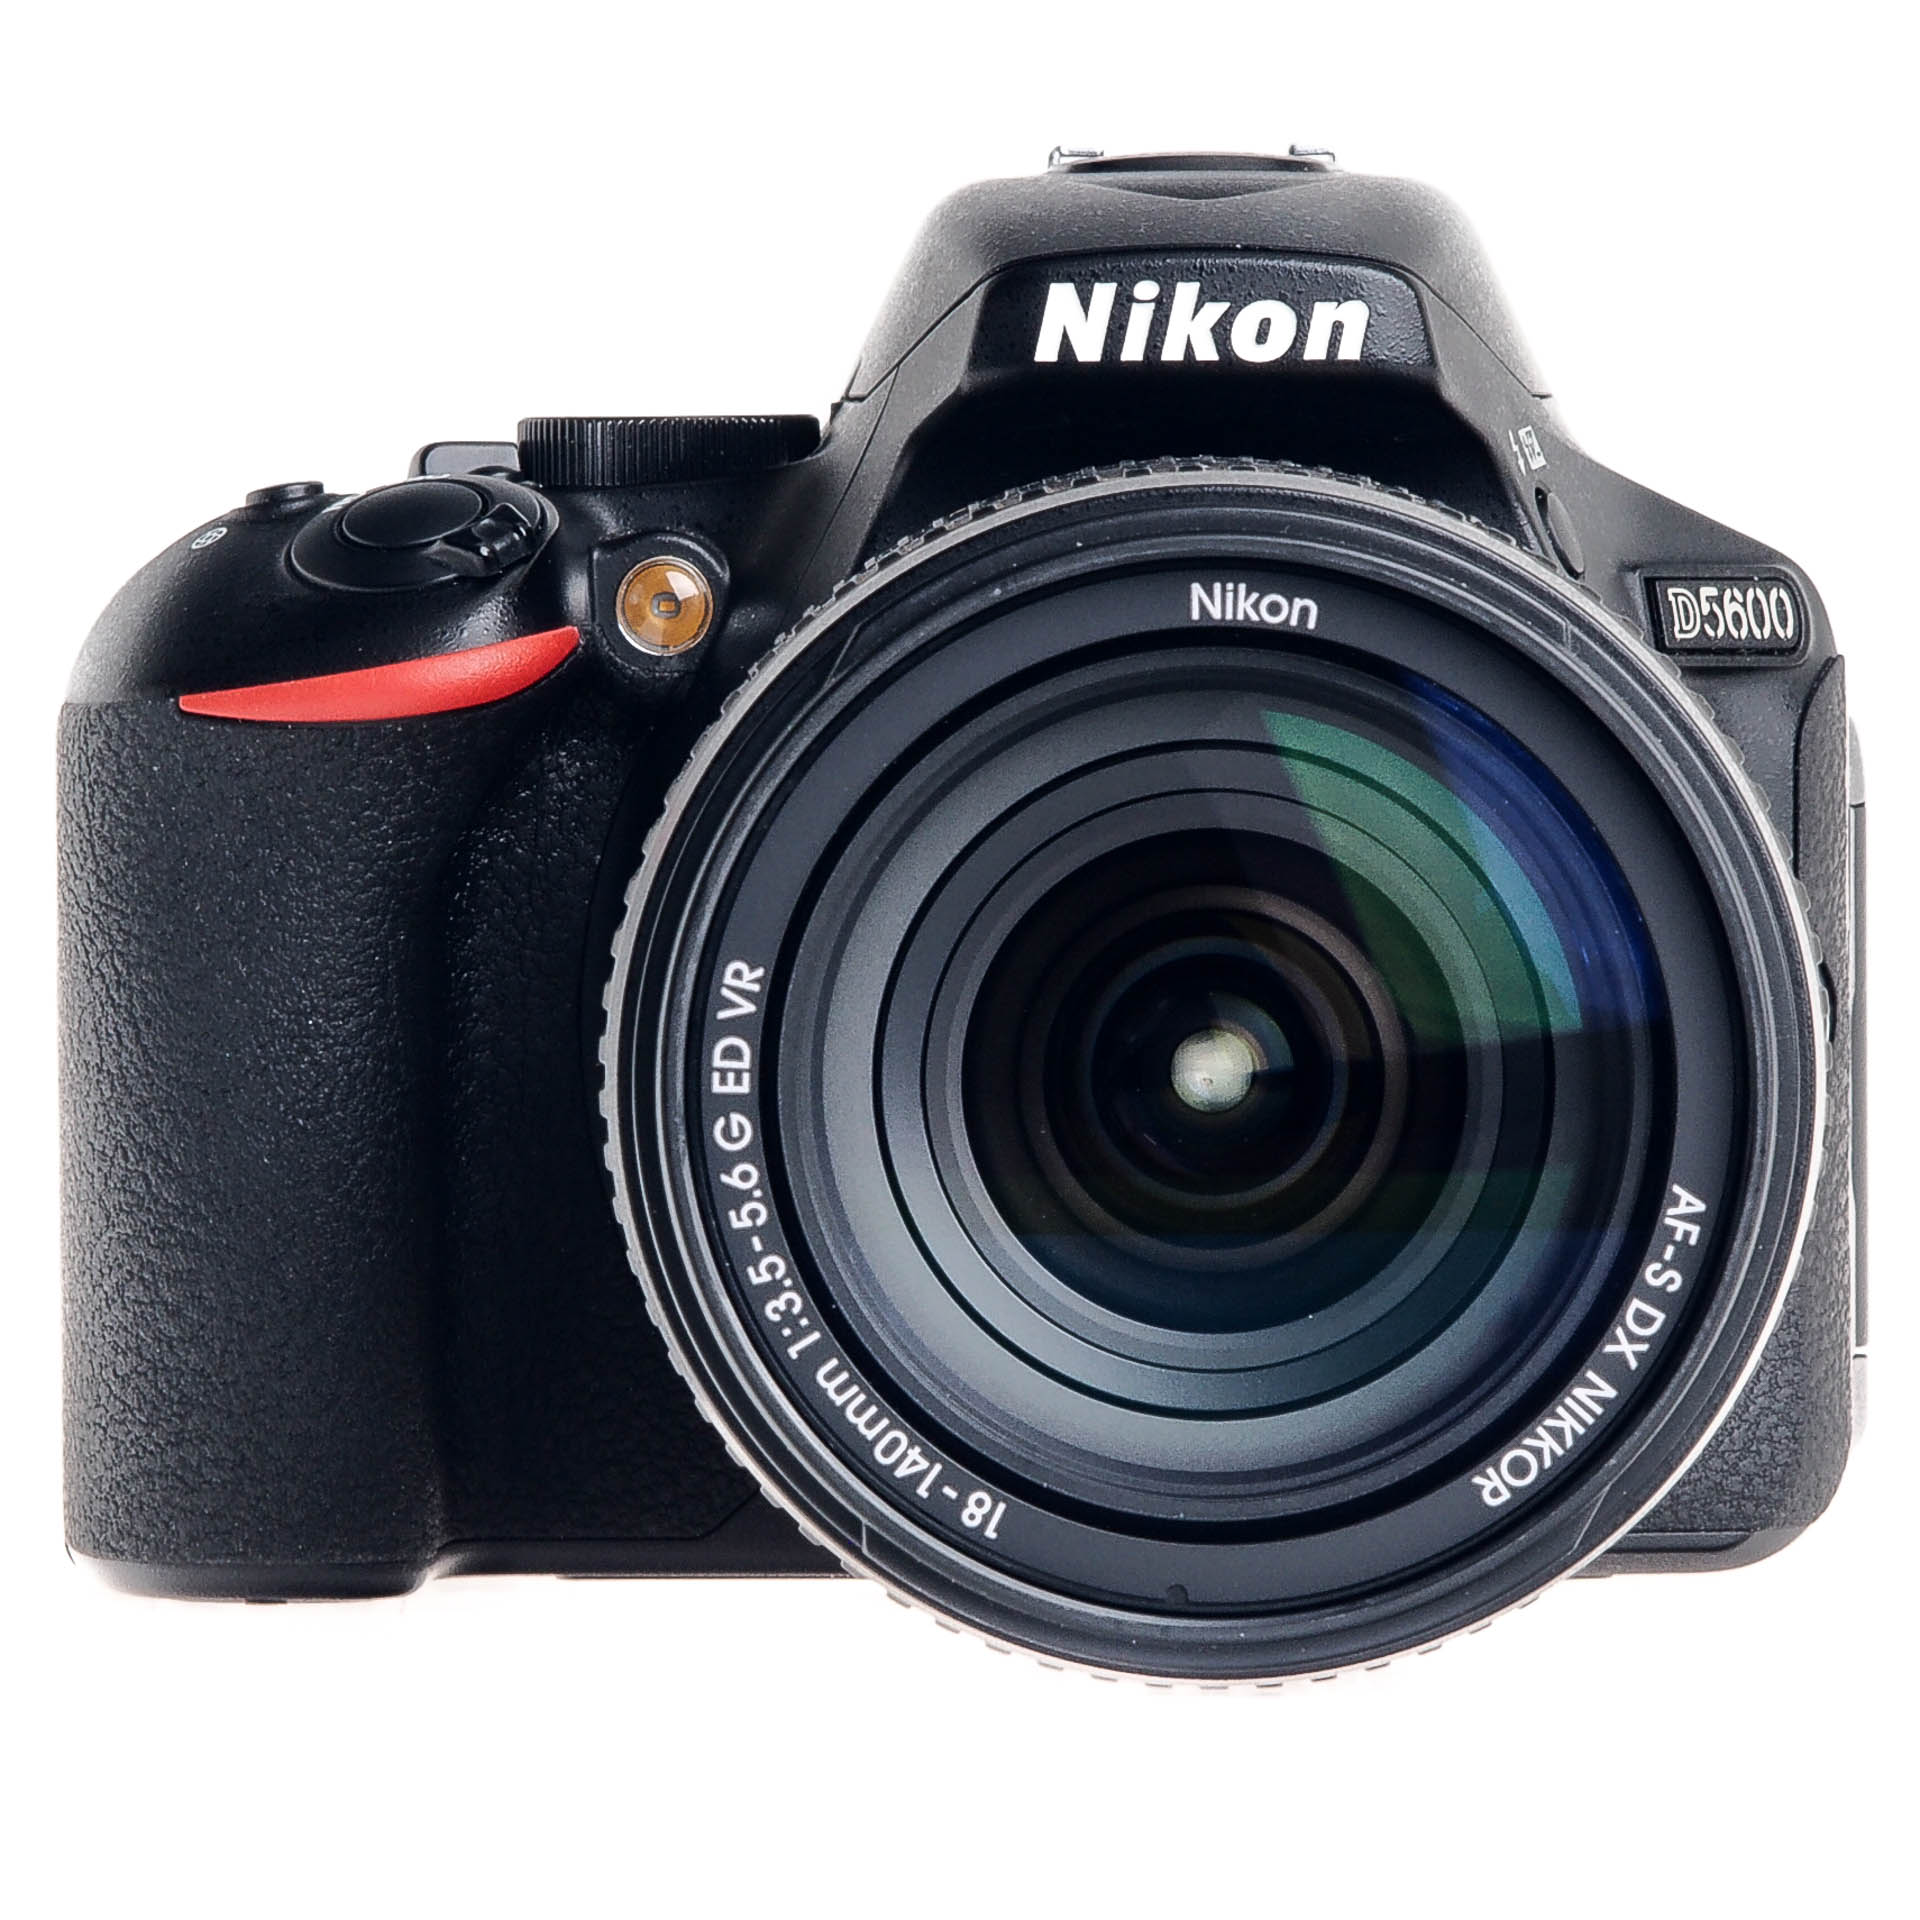 Nikon d5600 camera manual download for windows 10